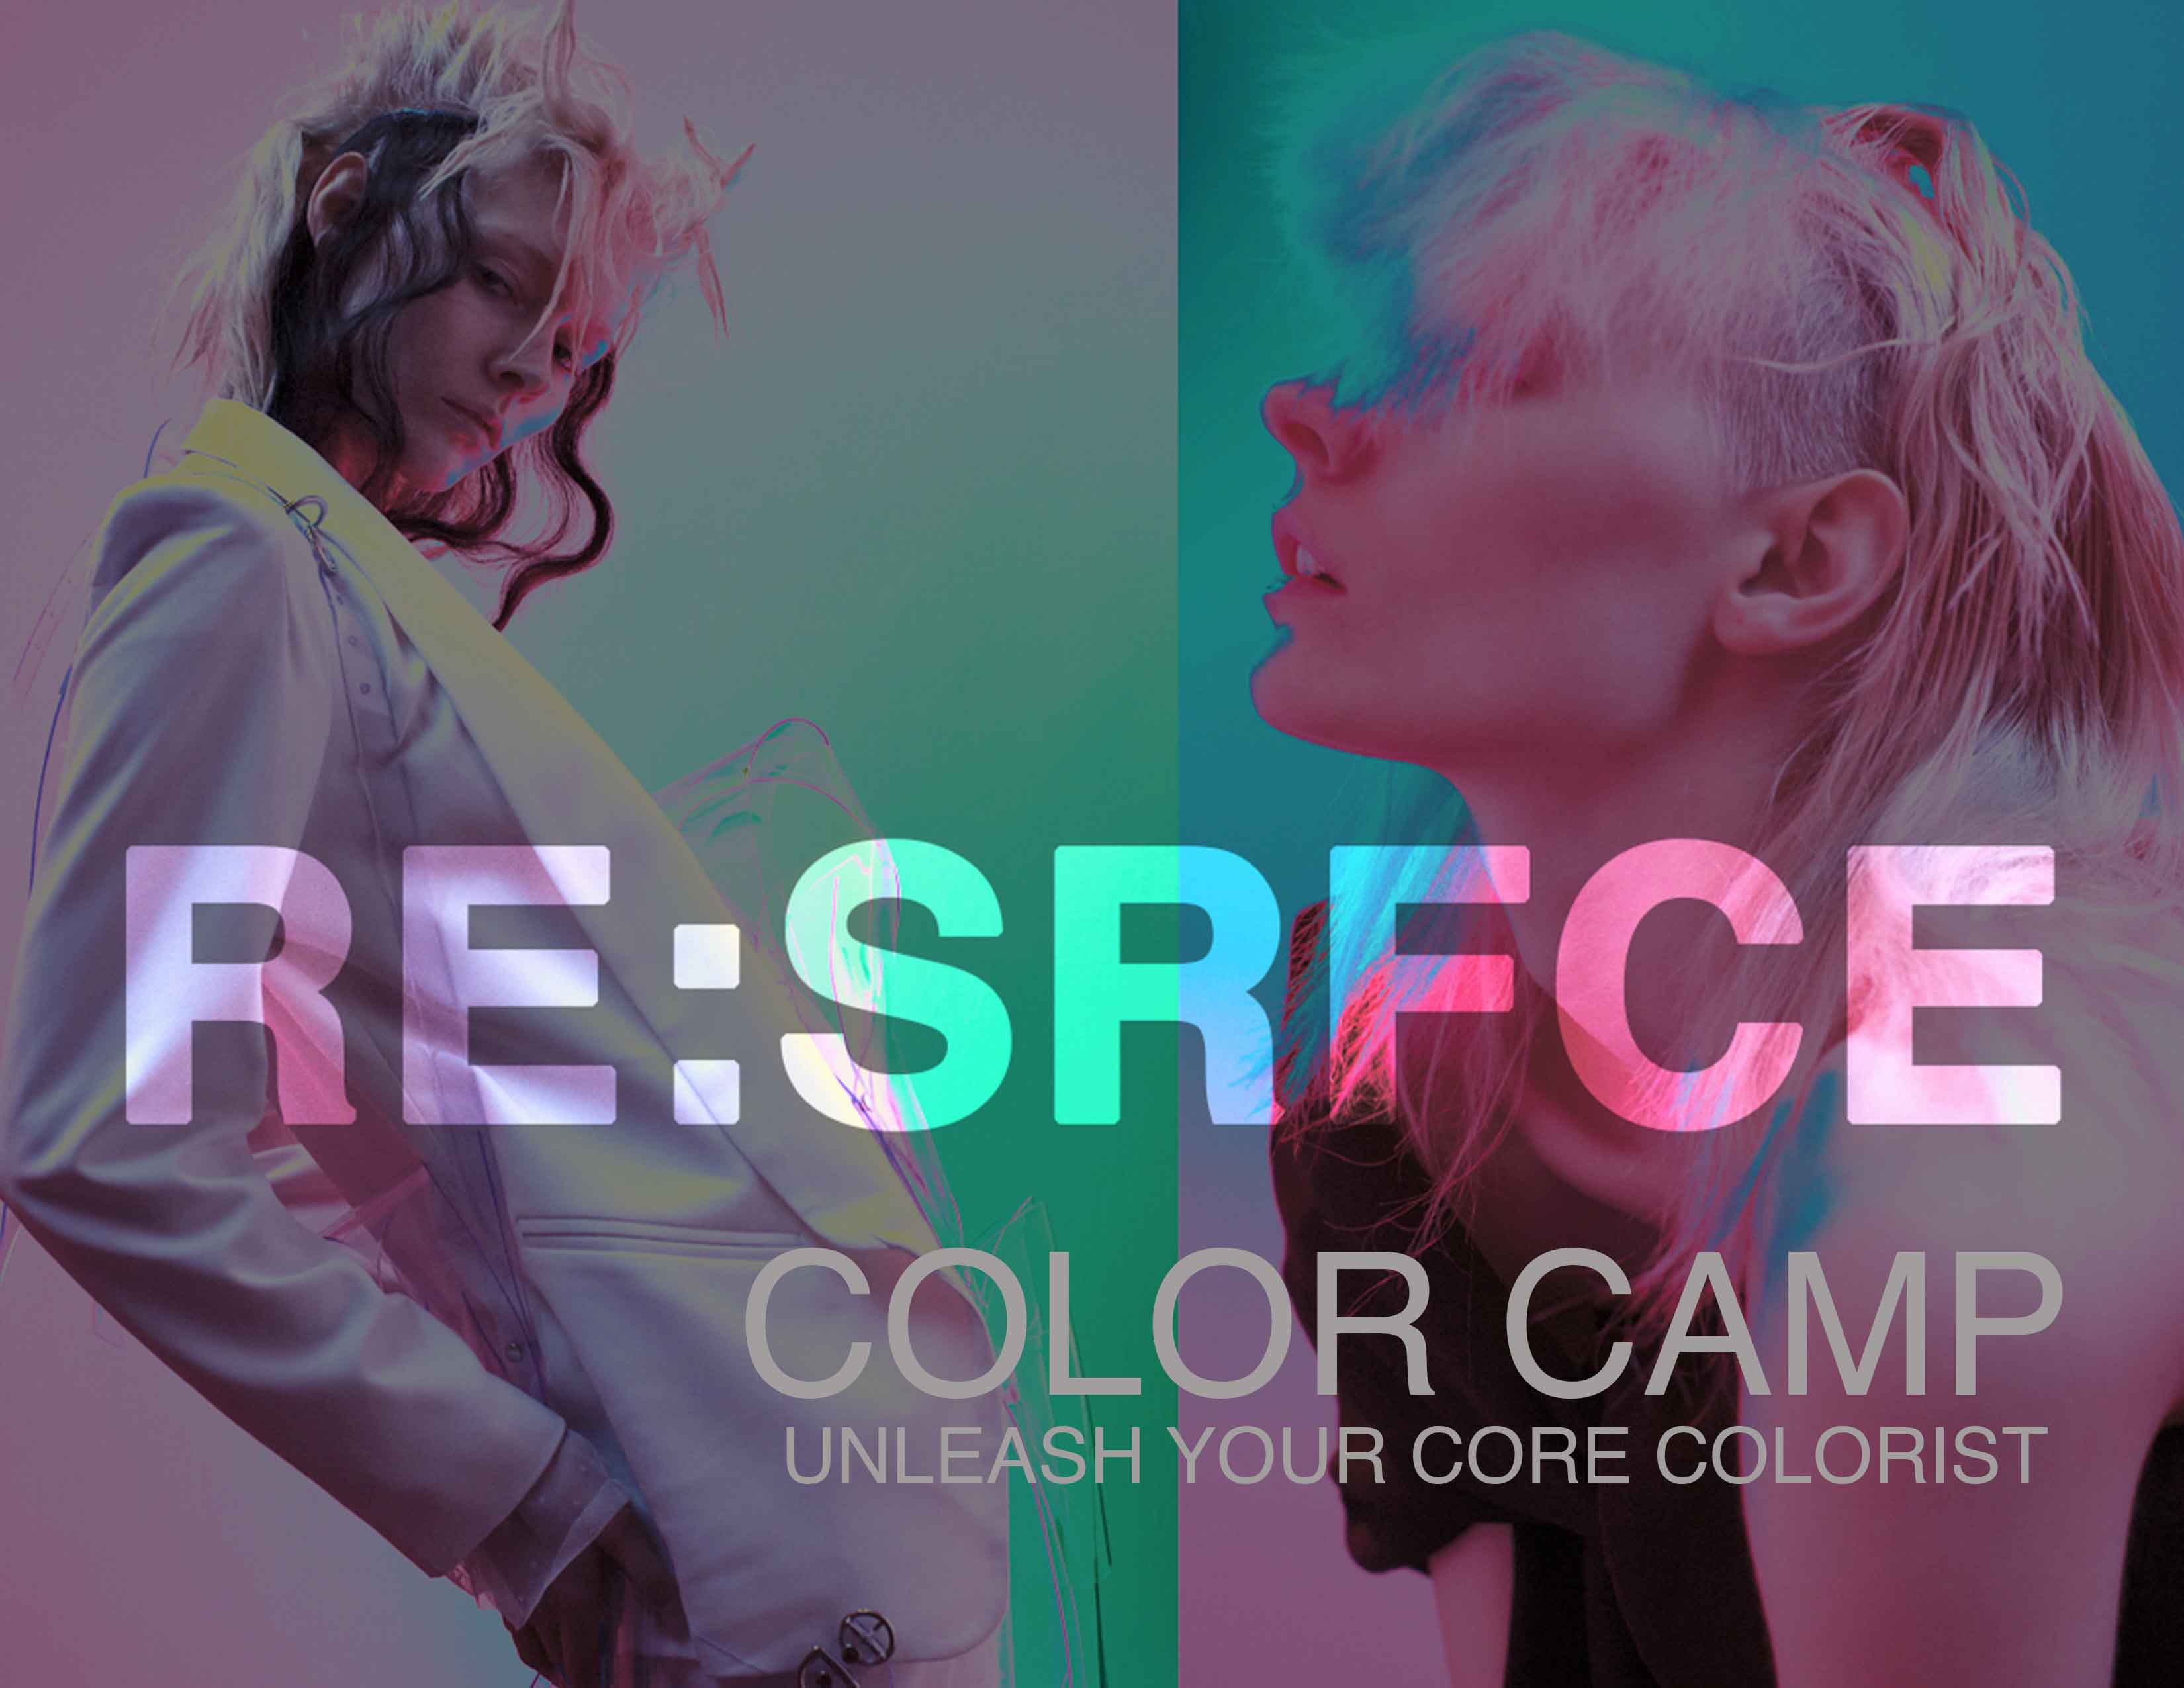 Color Camp